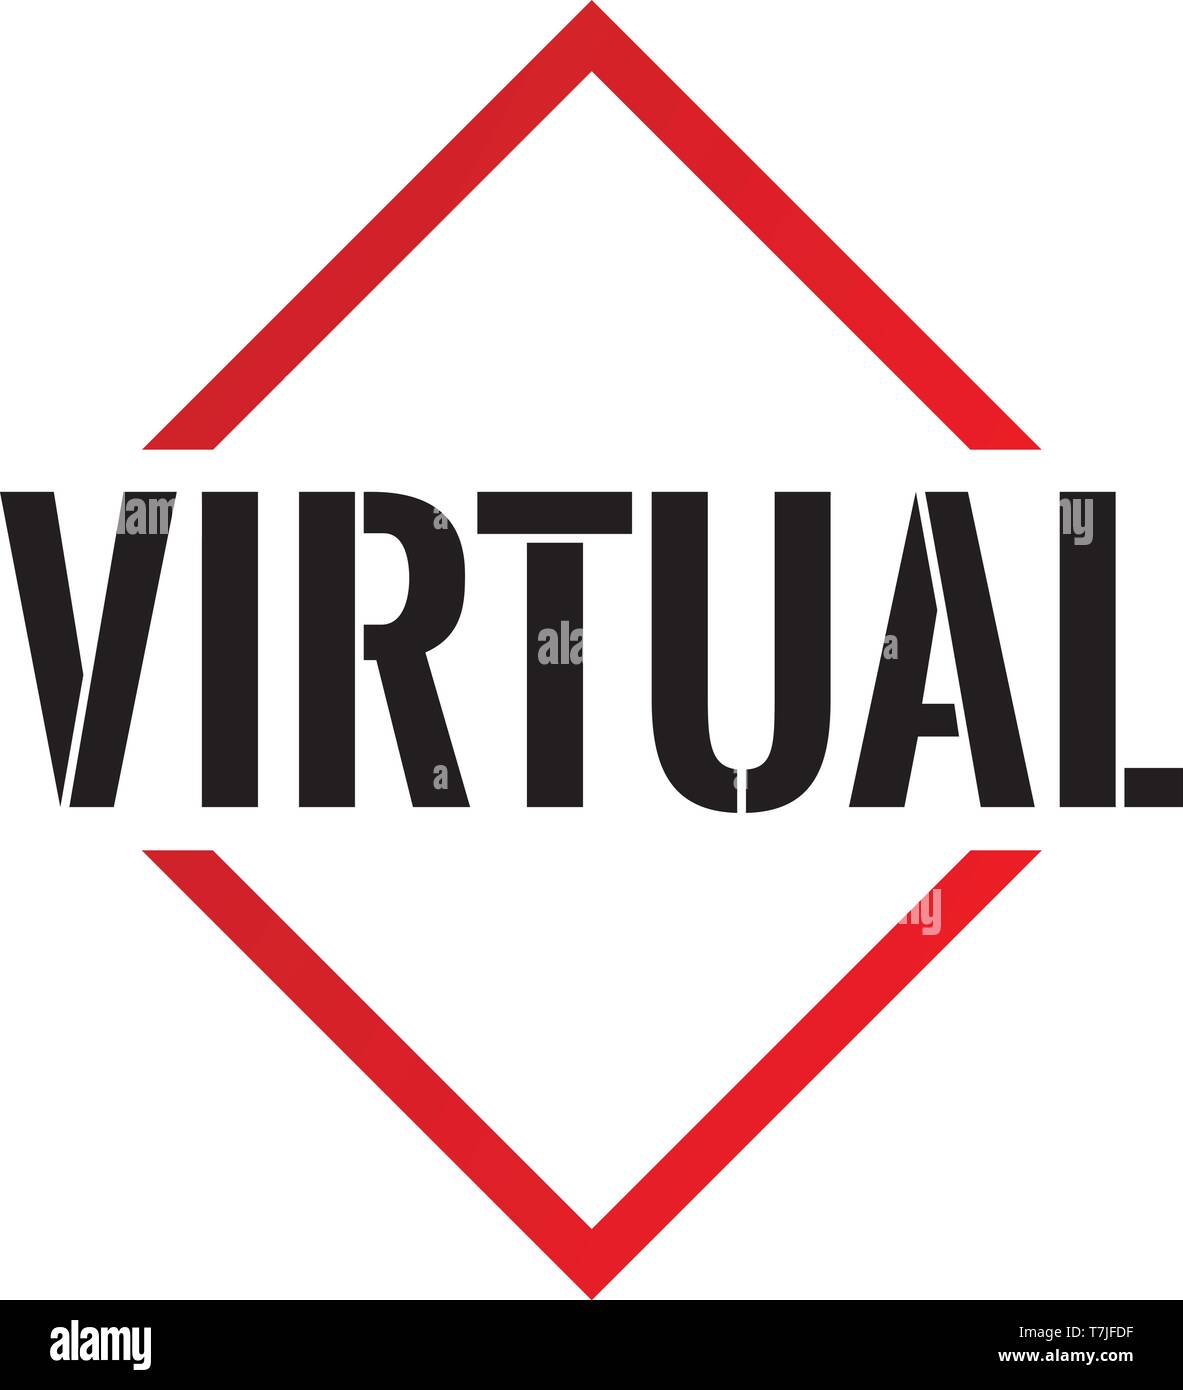 Virtual Triangle or pyramid line art vector icon Stock Vector